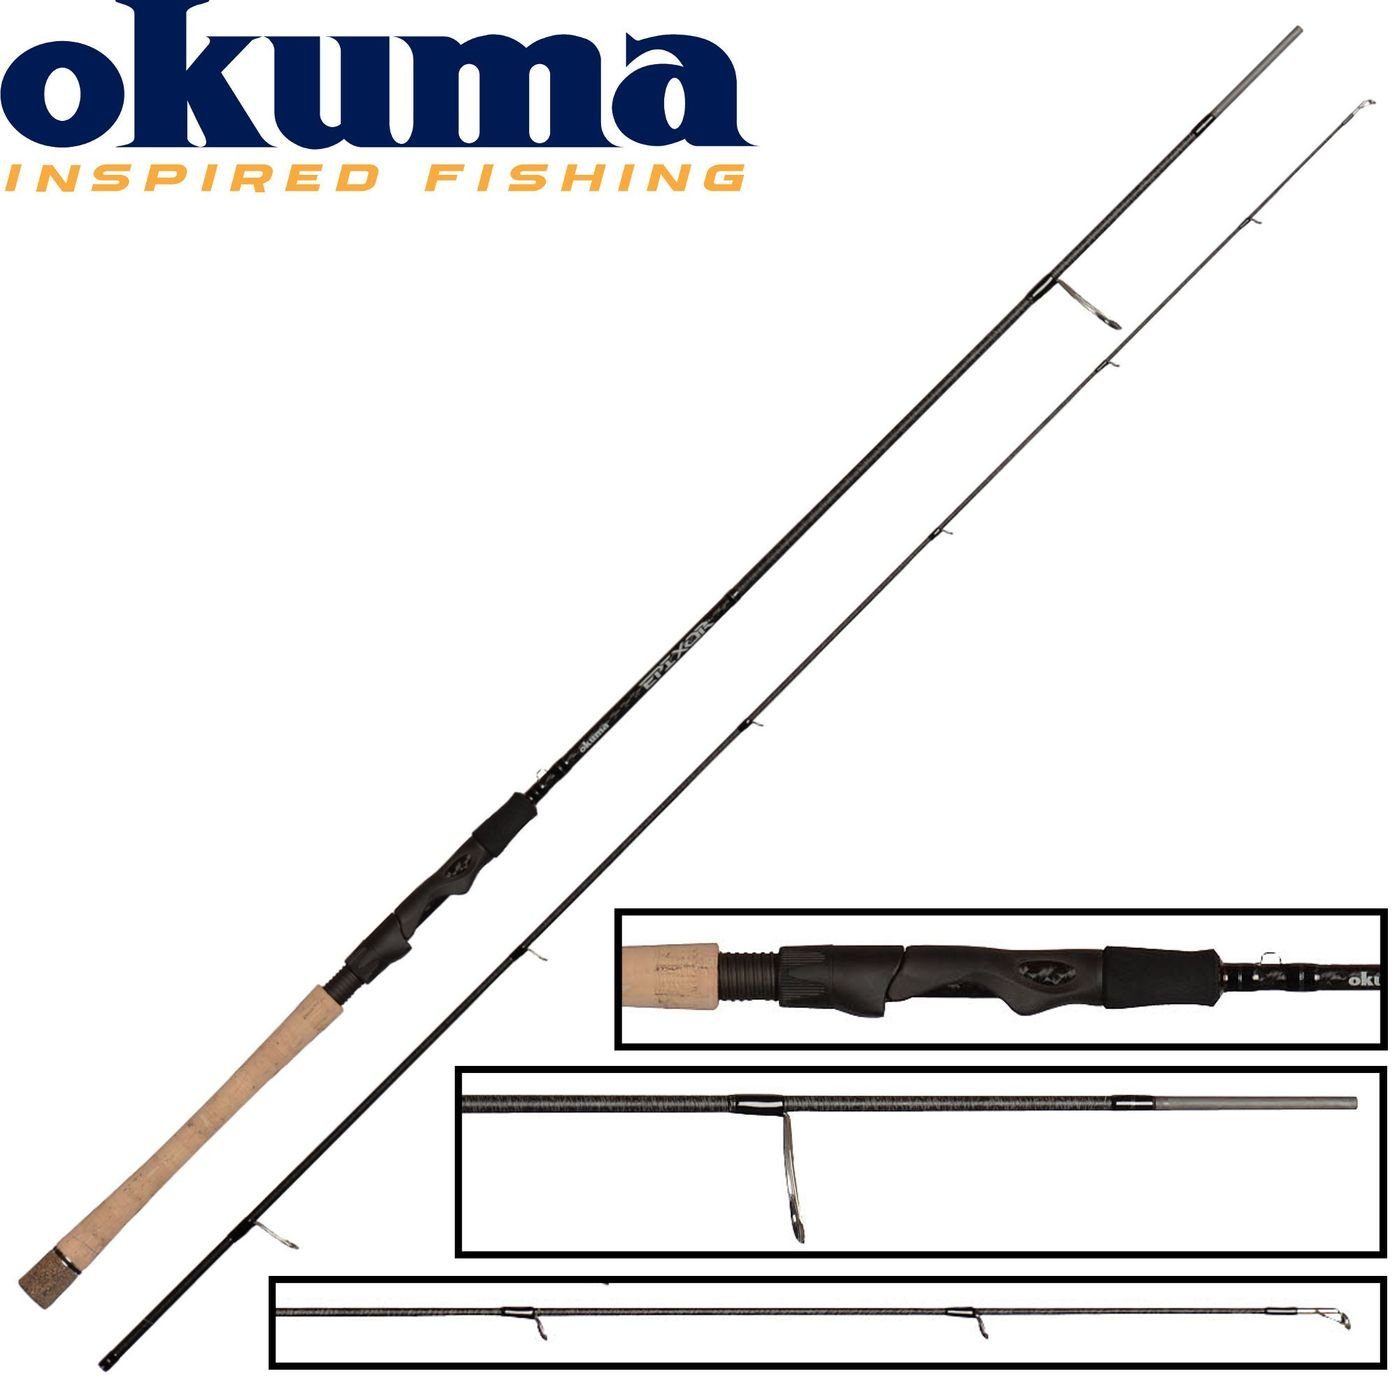 Okuma Spinnrute Okuma Epixor 210cm 3-18g - Spinnrute